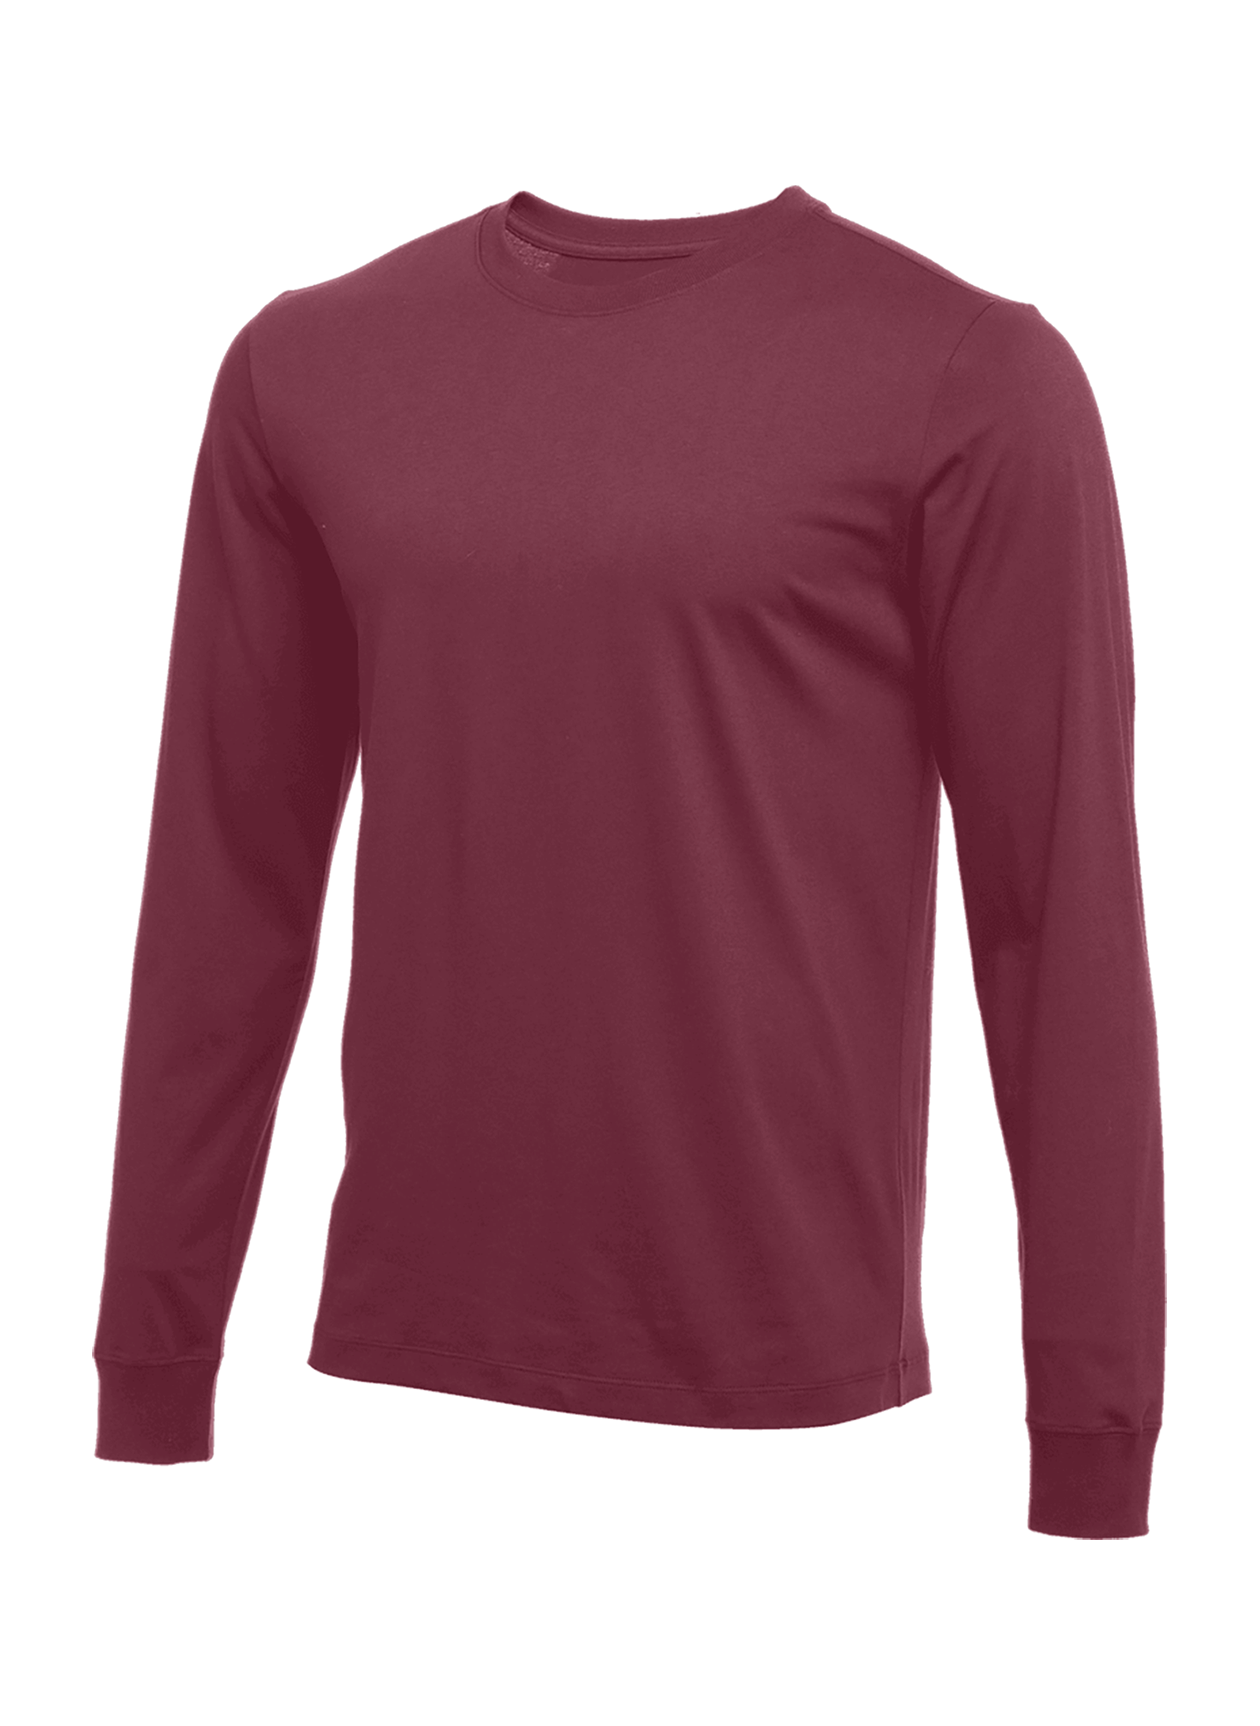 Nike Men's Deep Maroon Long-Sleeve T-Shirt